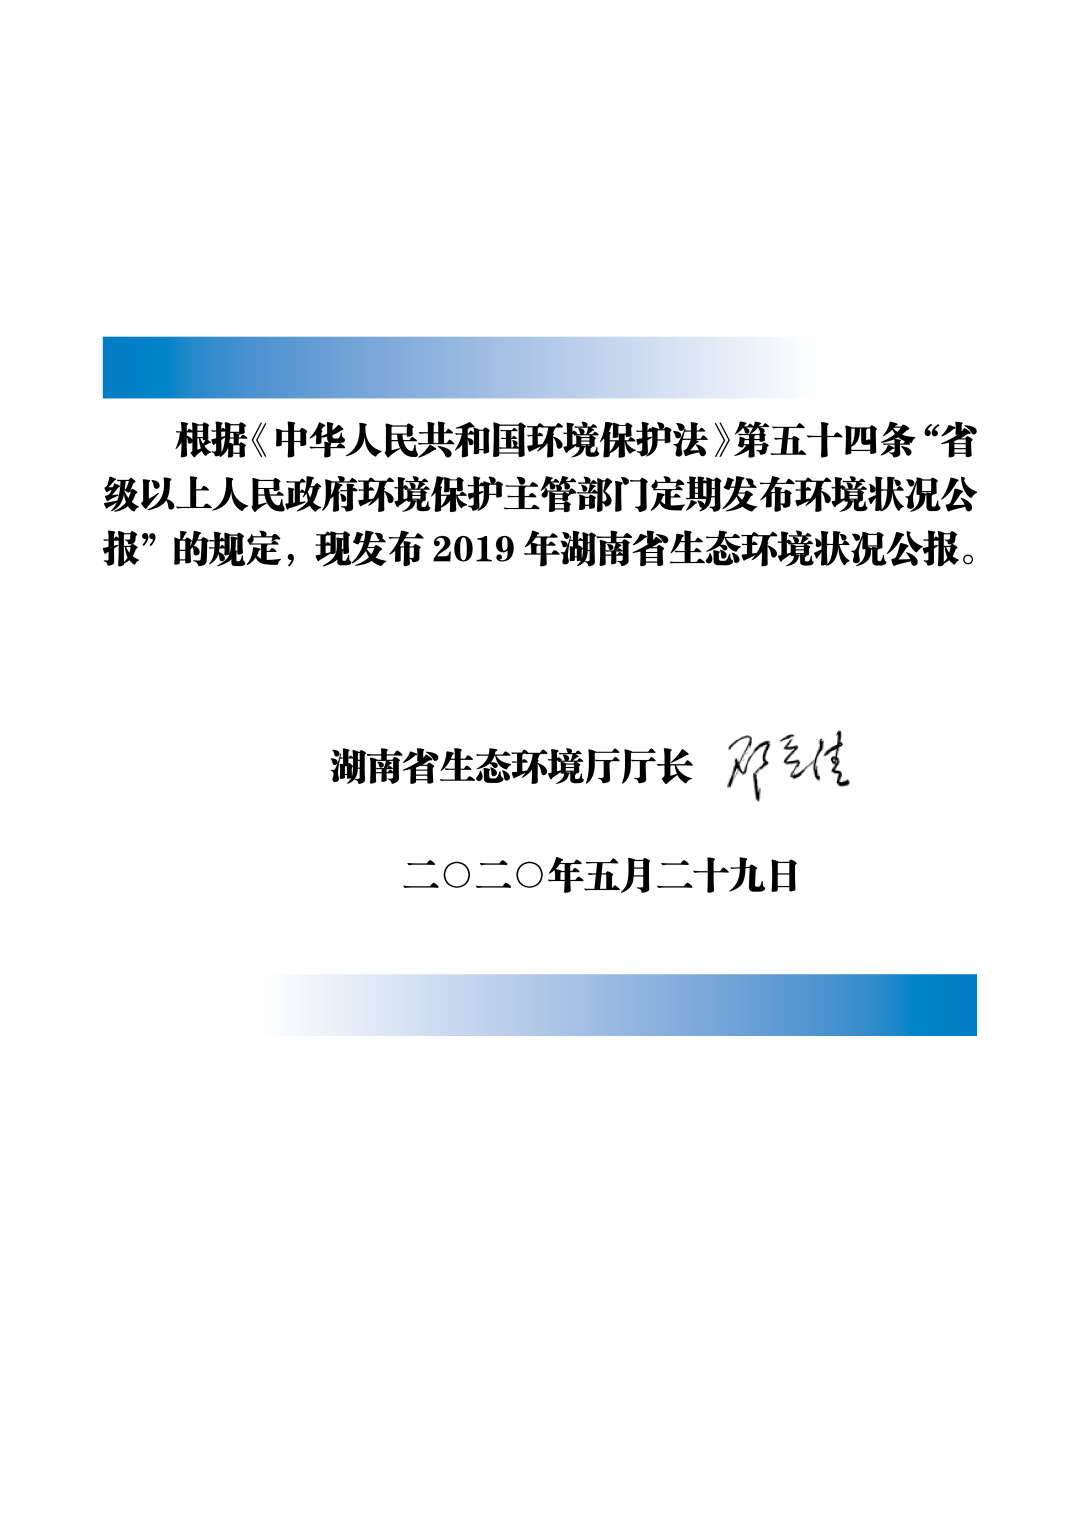 title：2019年湖南省生态环境状况公报发布